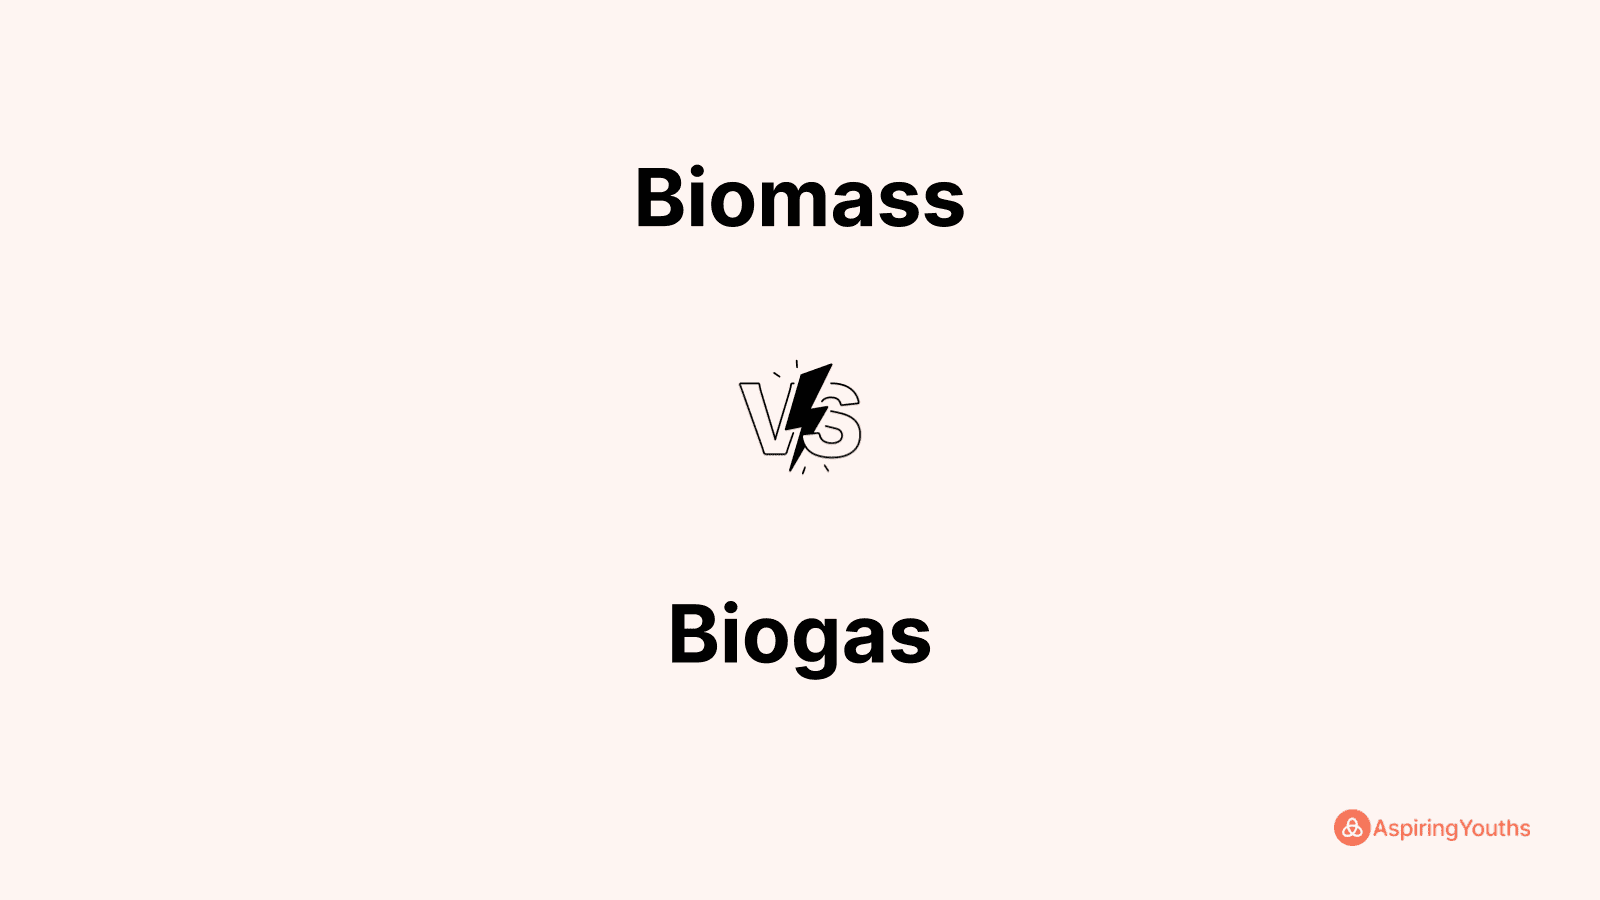 Biomass vs Biogas